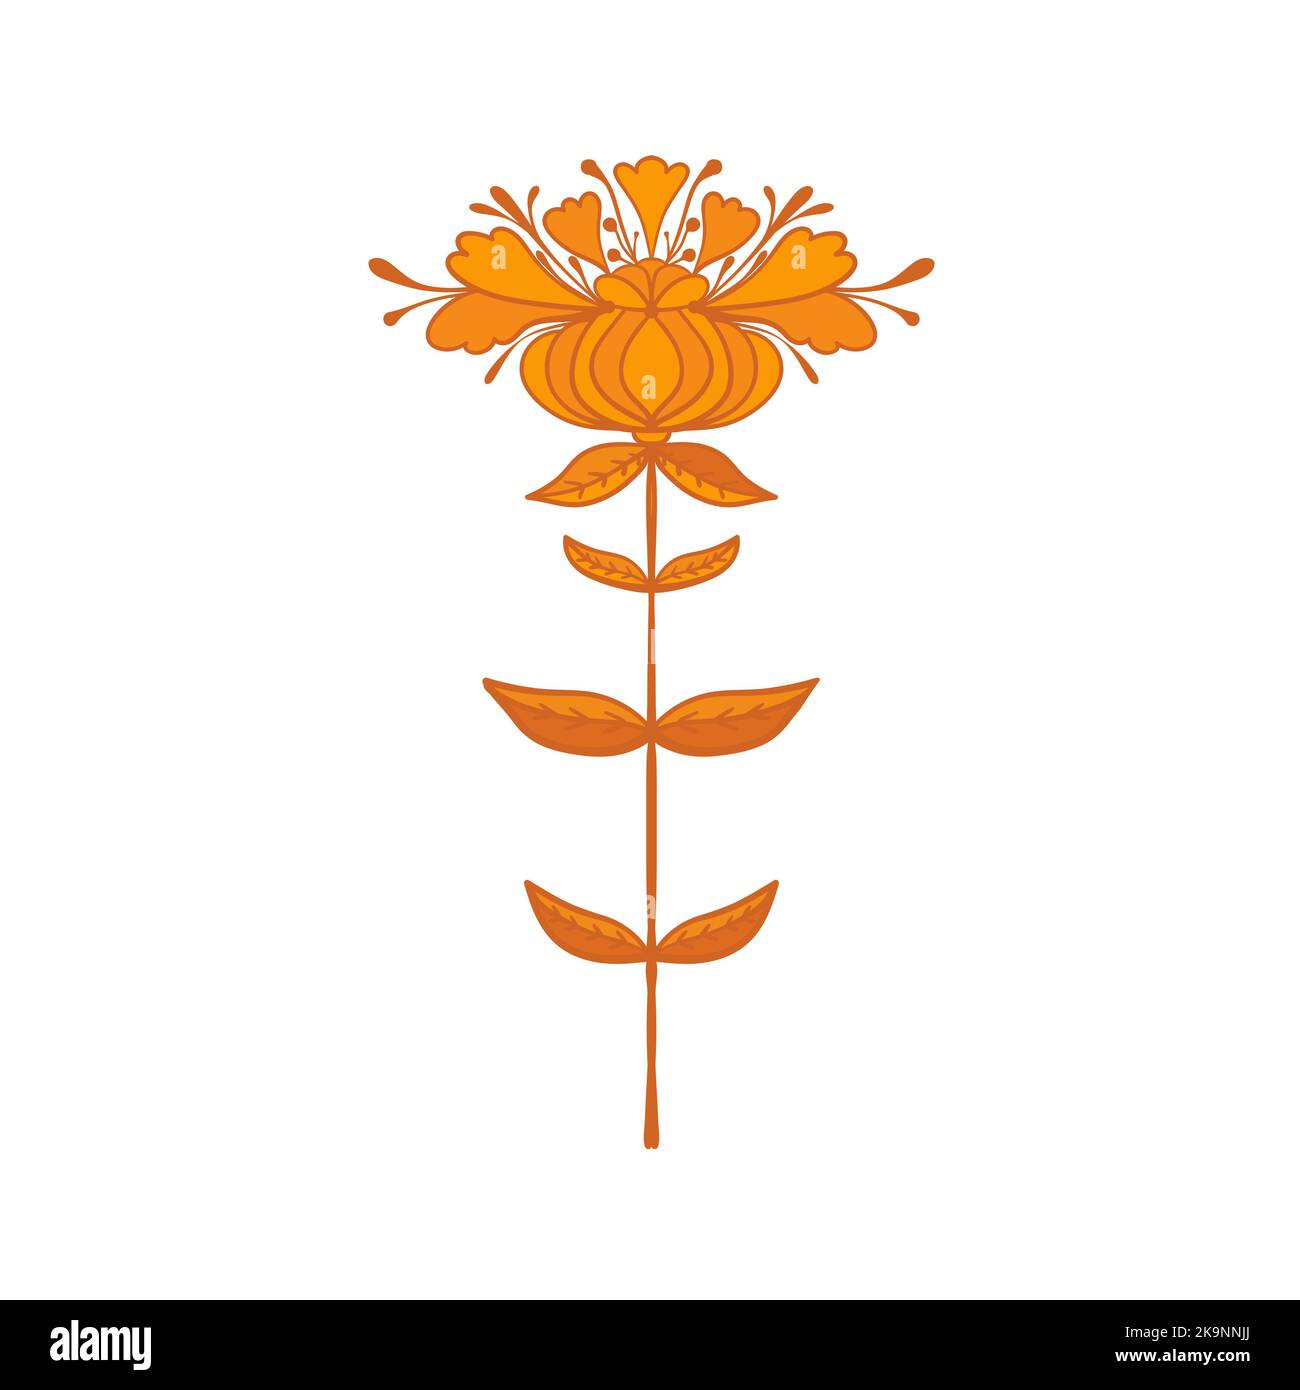 Symmetrical flower in ethnic style. Summer, spting decorative floral element for cards, poster, scrapbook, textile design Stock Vector